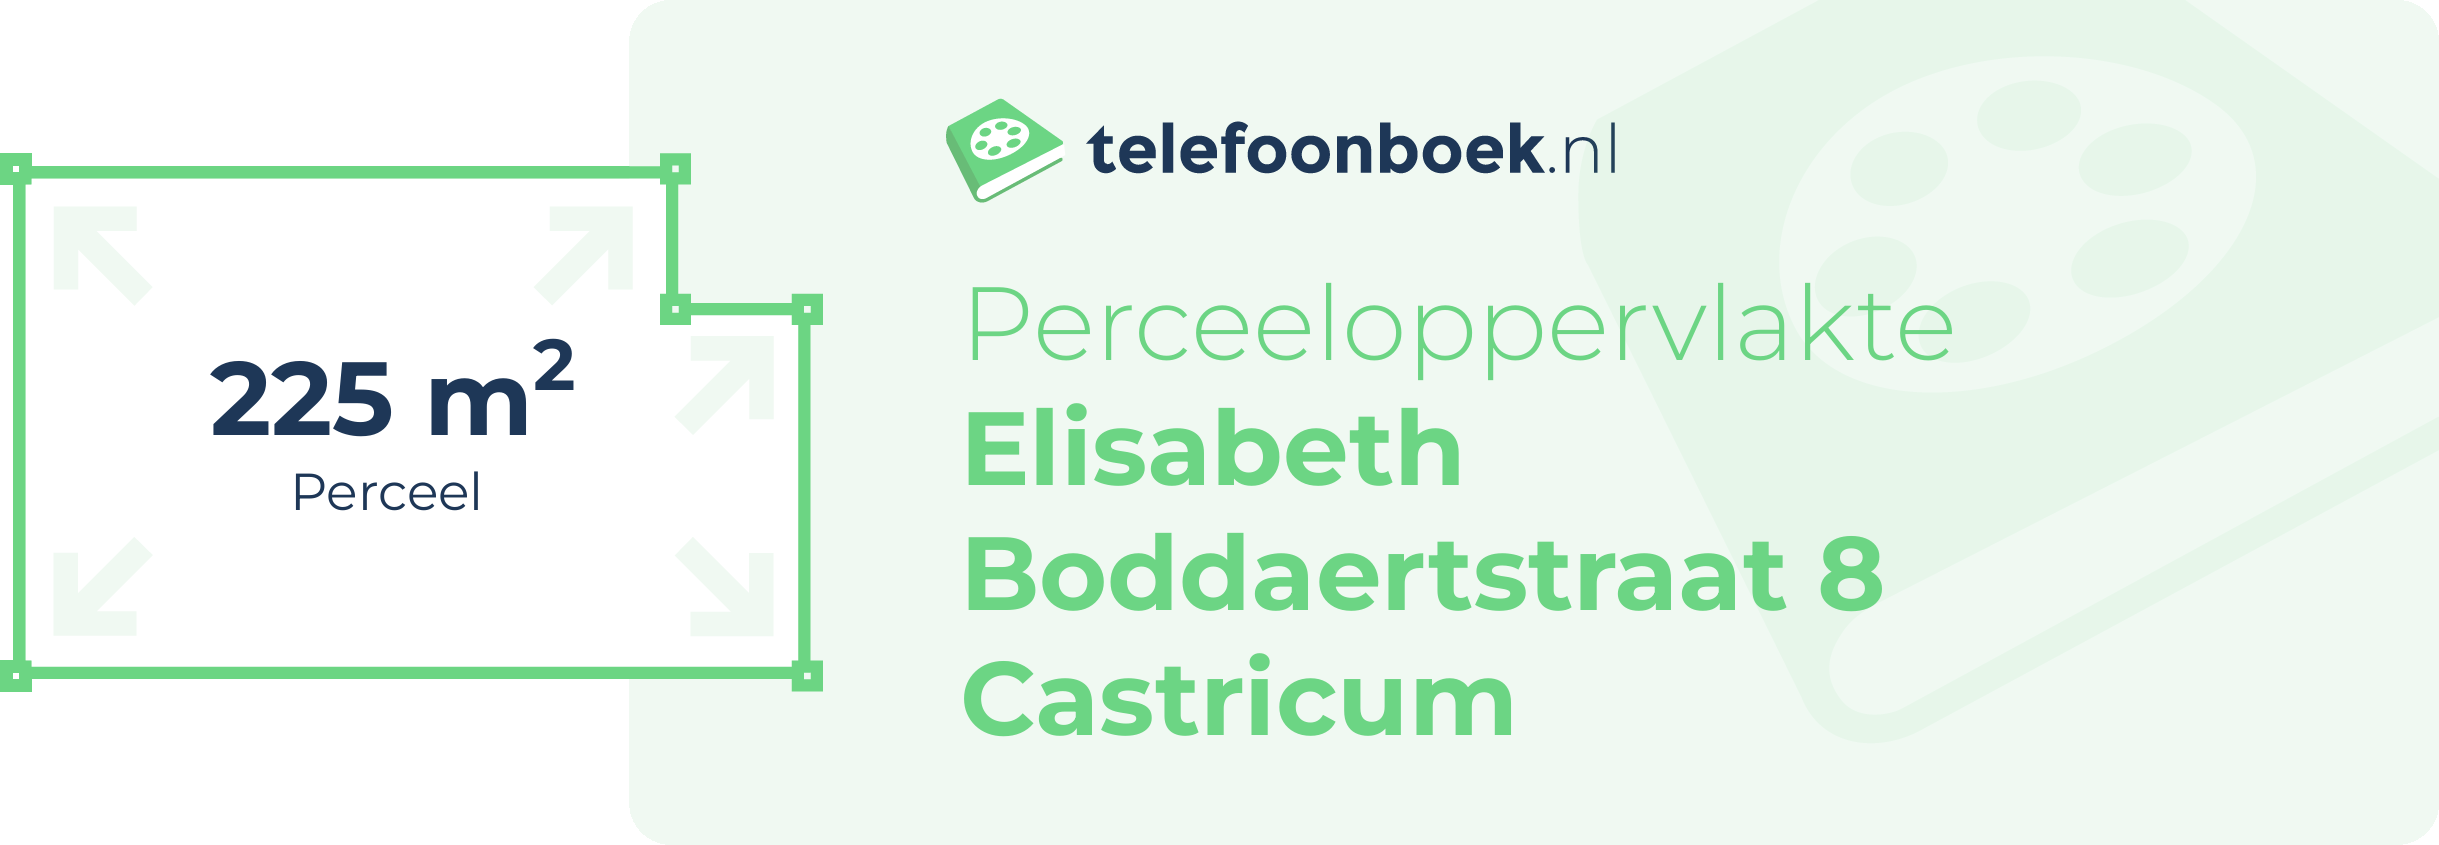 Perceeloppervlakte Elisabeth Boddaertstraat 8 Castricum